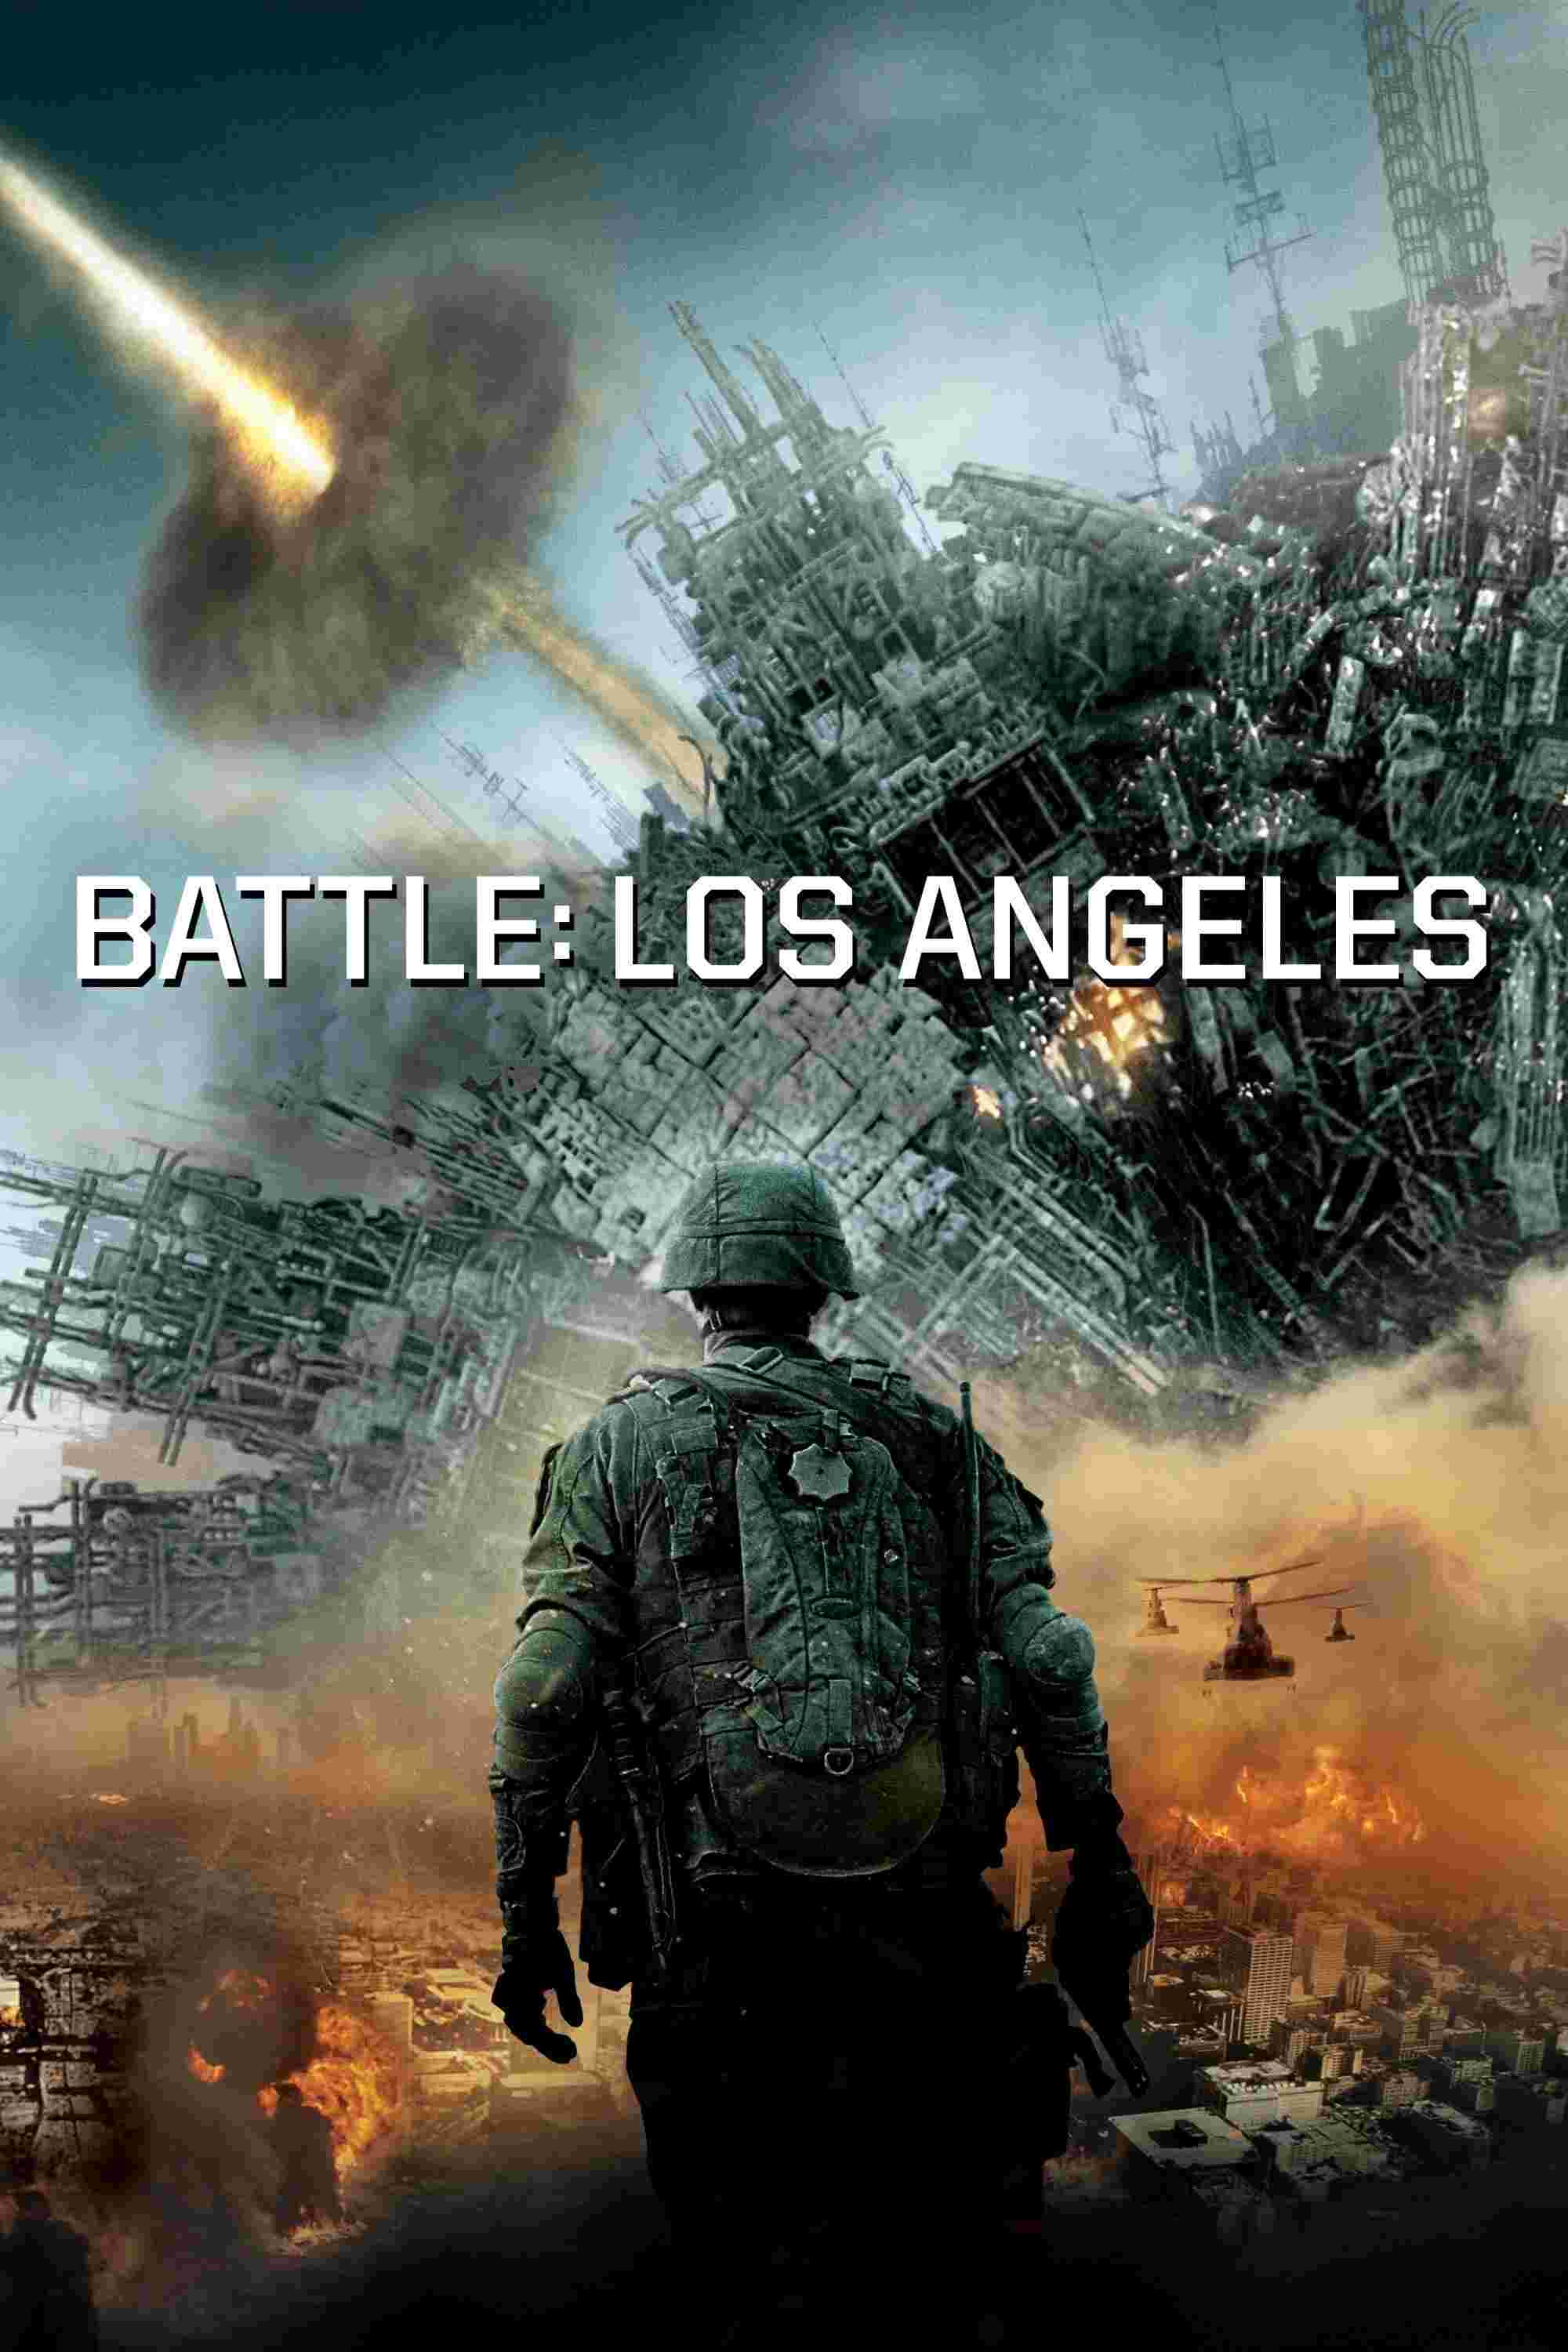 Battle Los Angeles (2011) Aaron Eckhart